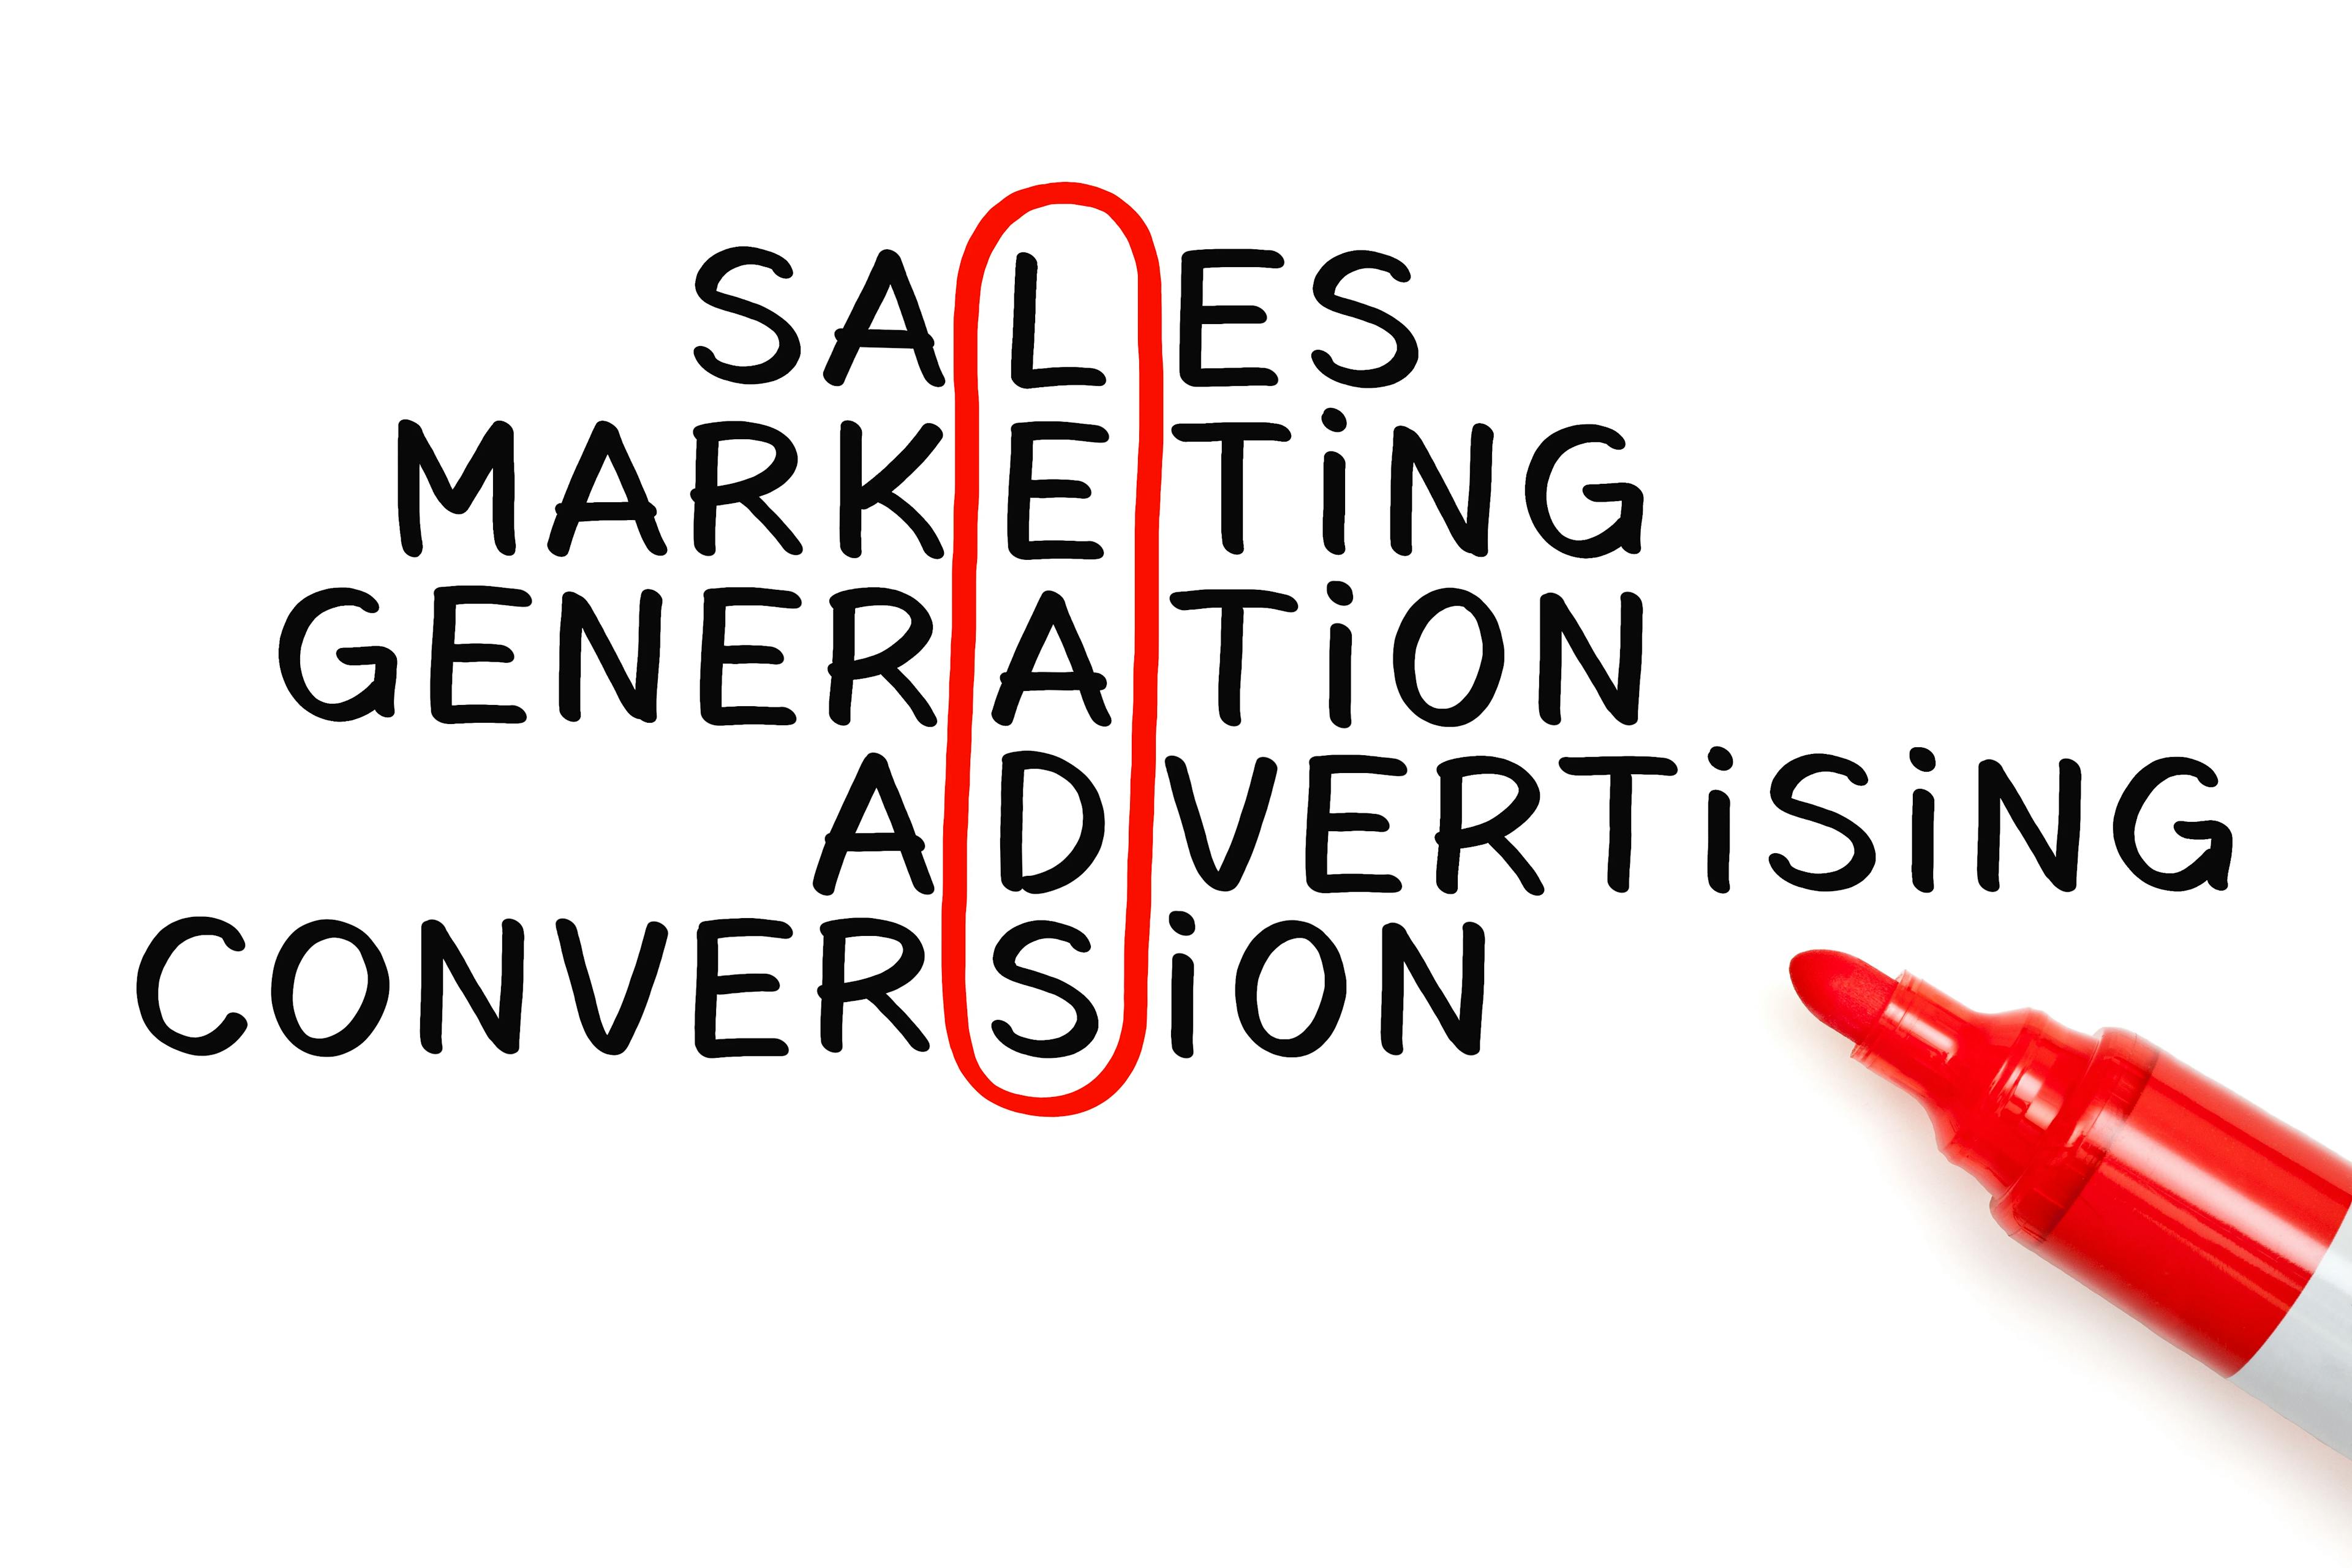 Sales marketing generation advertising conversion